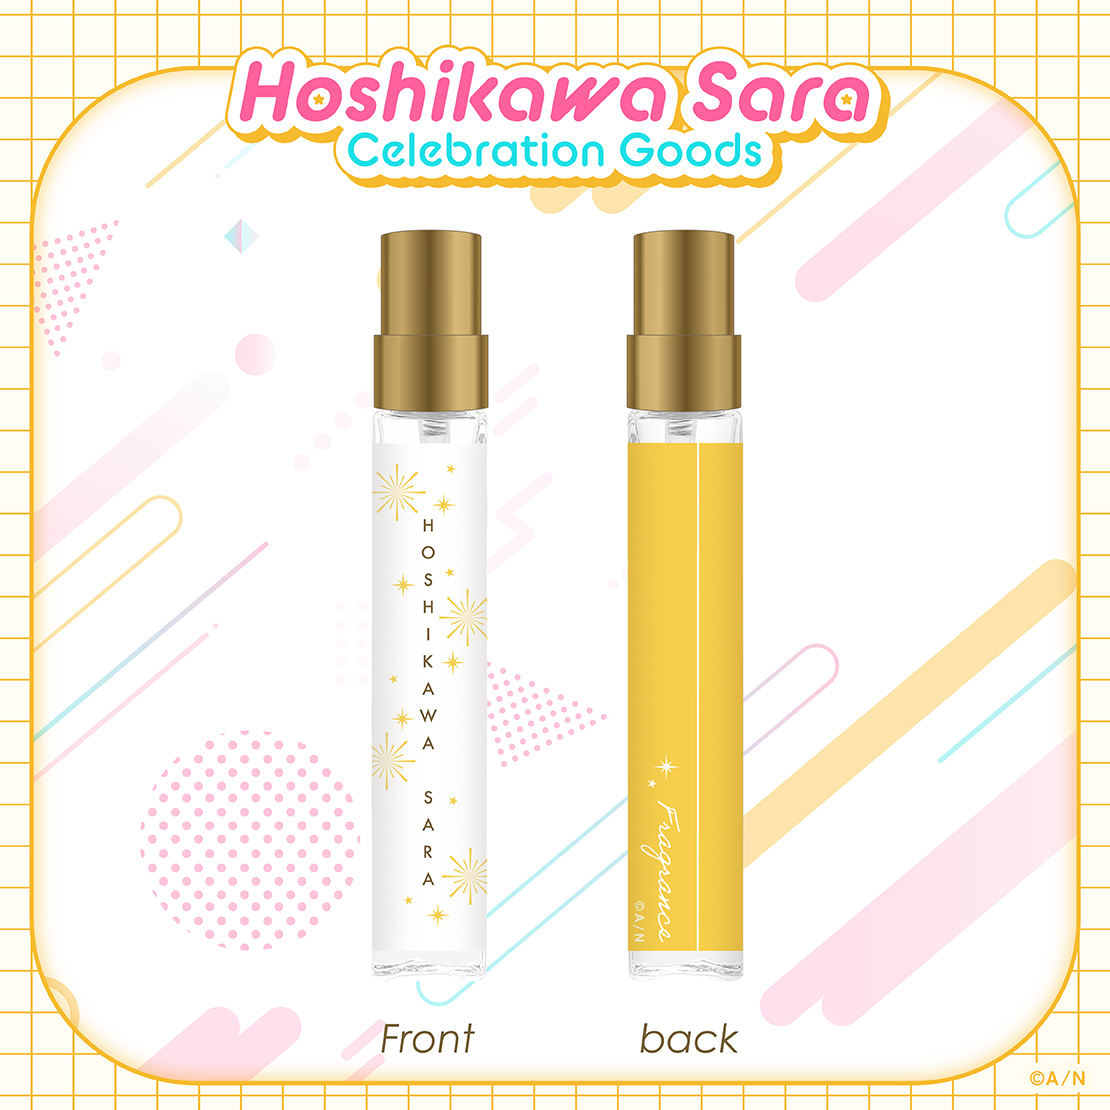 【Hoshikawa Sara Celebration Goods】フレグランスミスト2本セット ライバー 関連タグ 商品を選択